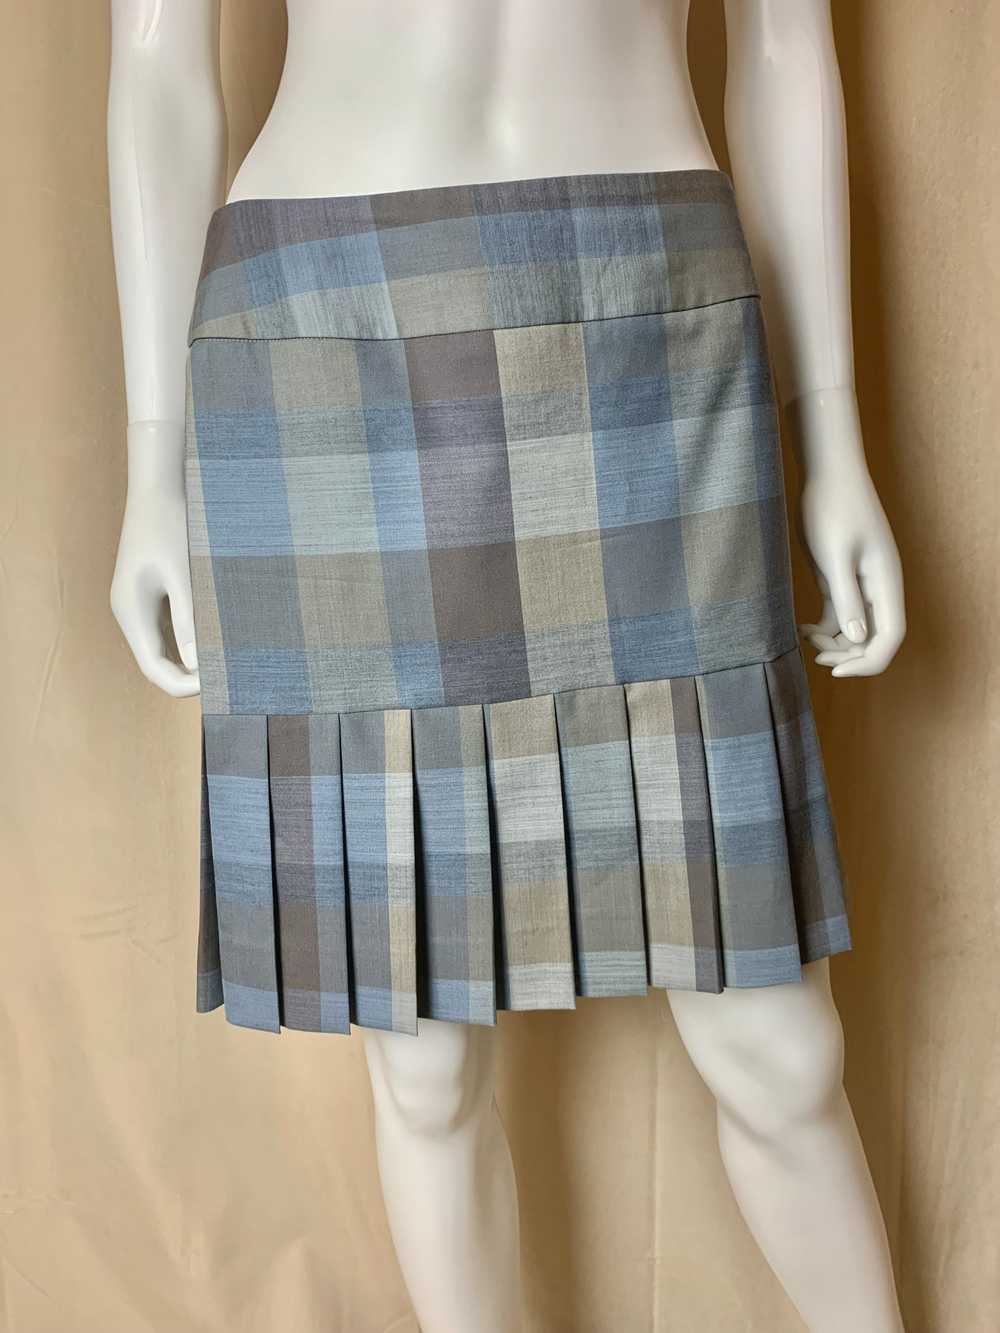 Vivienne Westwood SS 2013 Skirt Suit - image 7